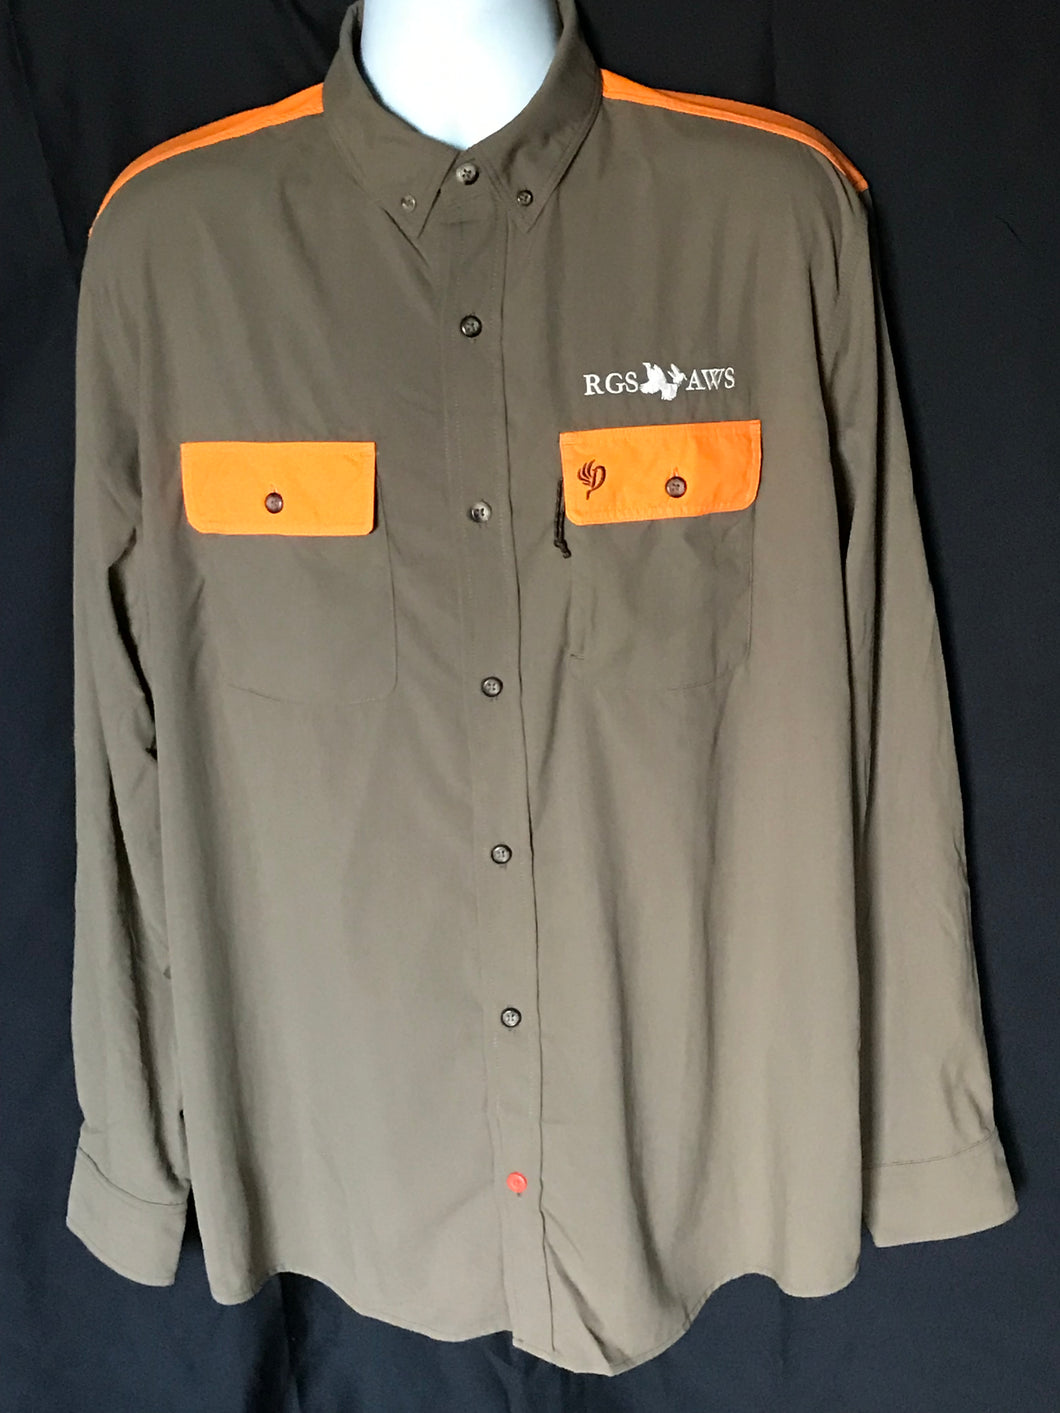 Lightweight Long Sleeve Hunting Shirt - Pin Oak Upland with RGS & AWS Logo